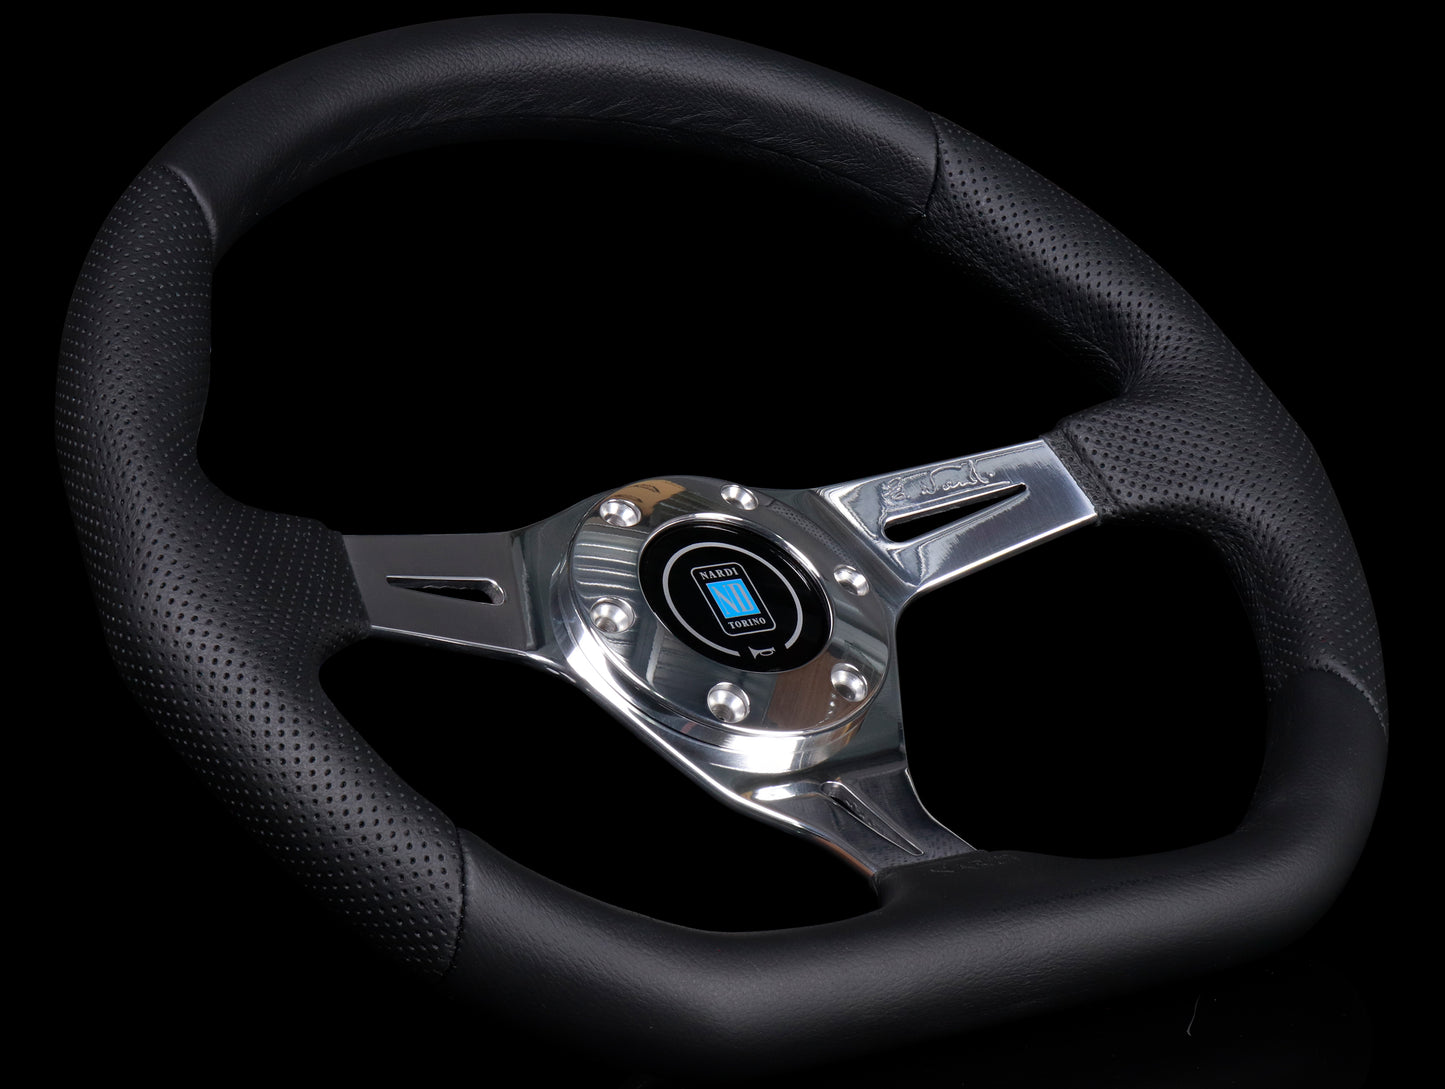 Nardi Basic Kallista 350mm Steering Wheel - Black Leather / Polished Spokes